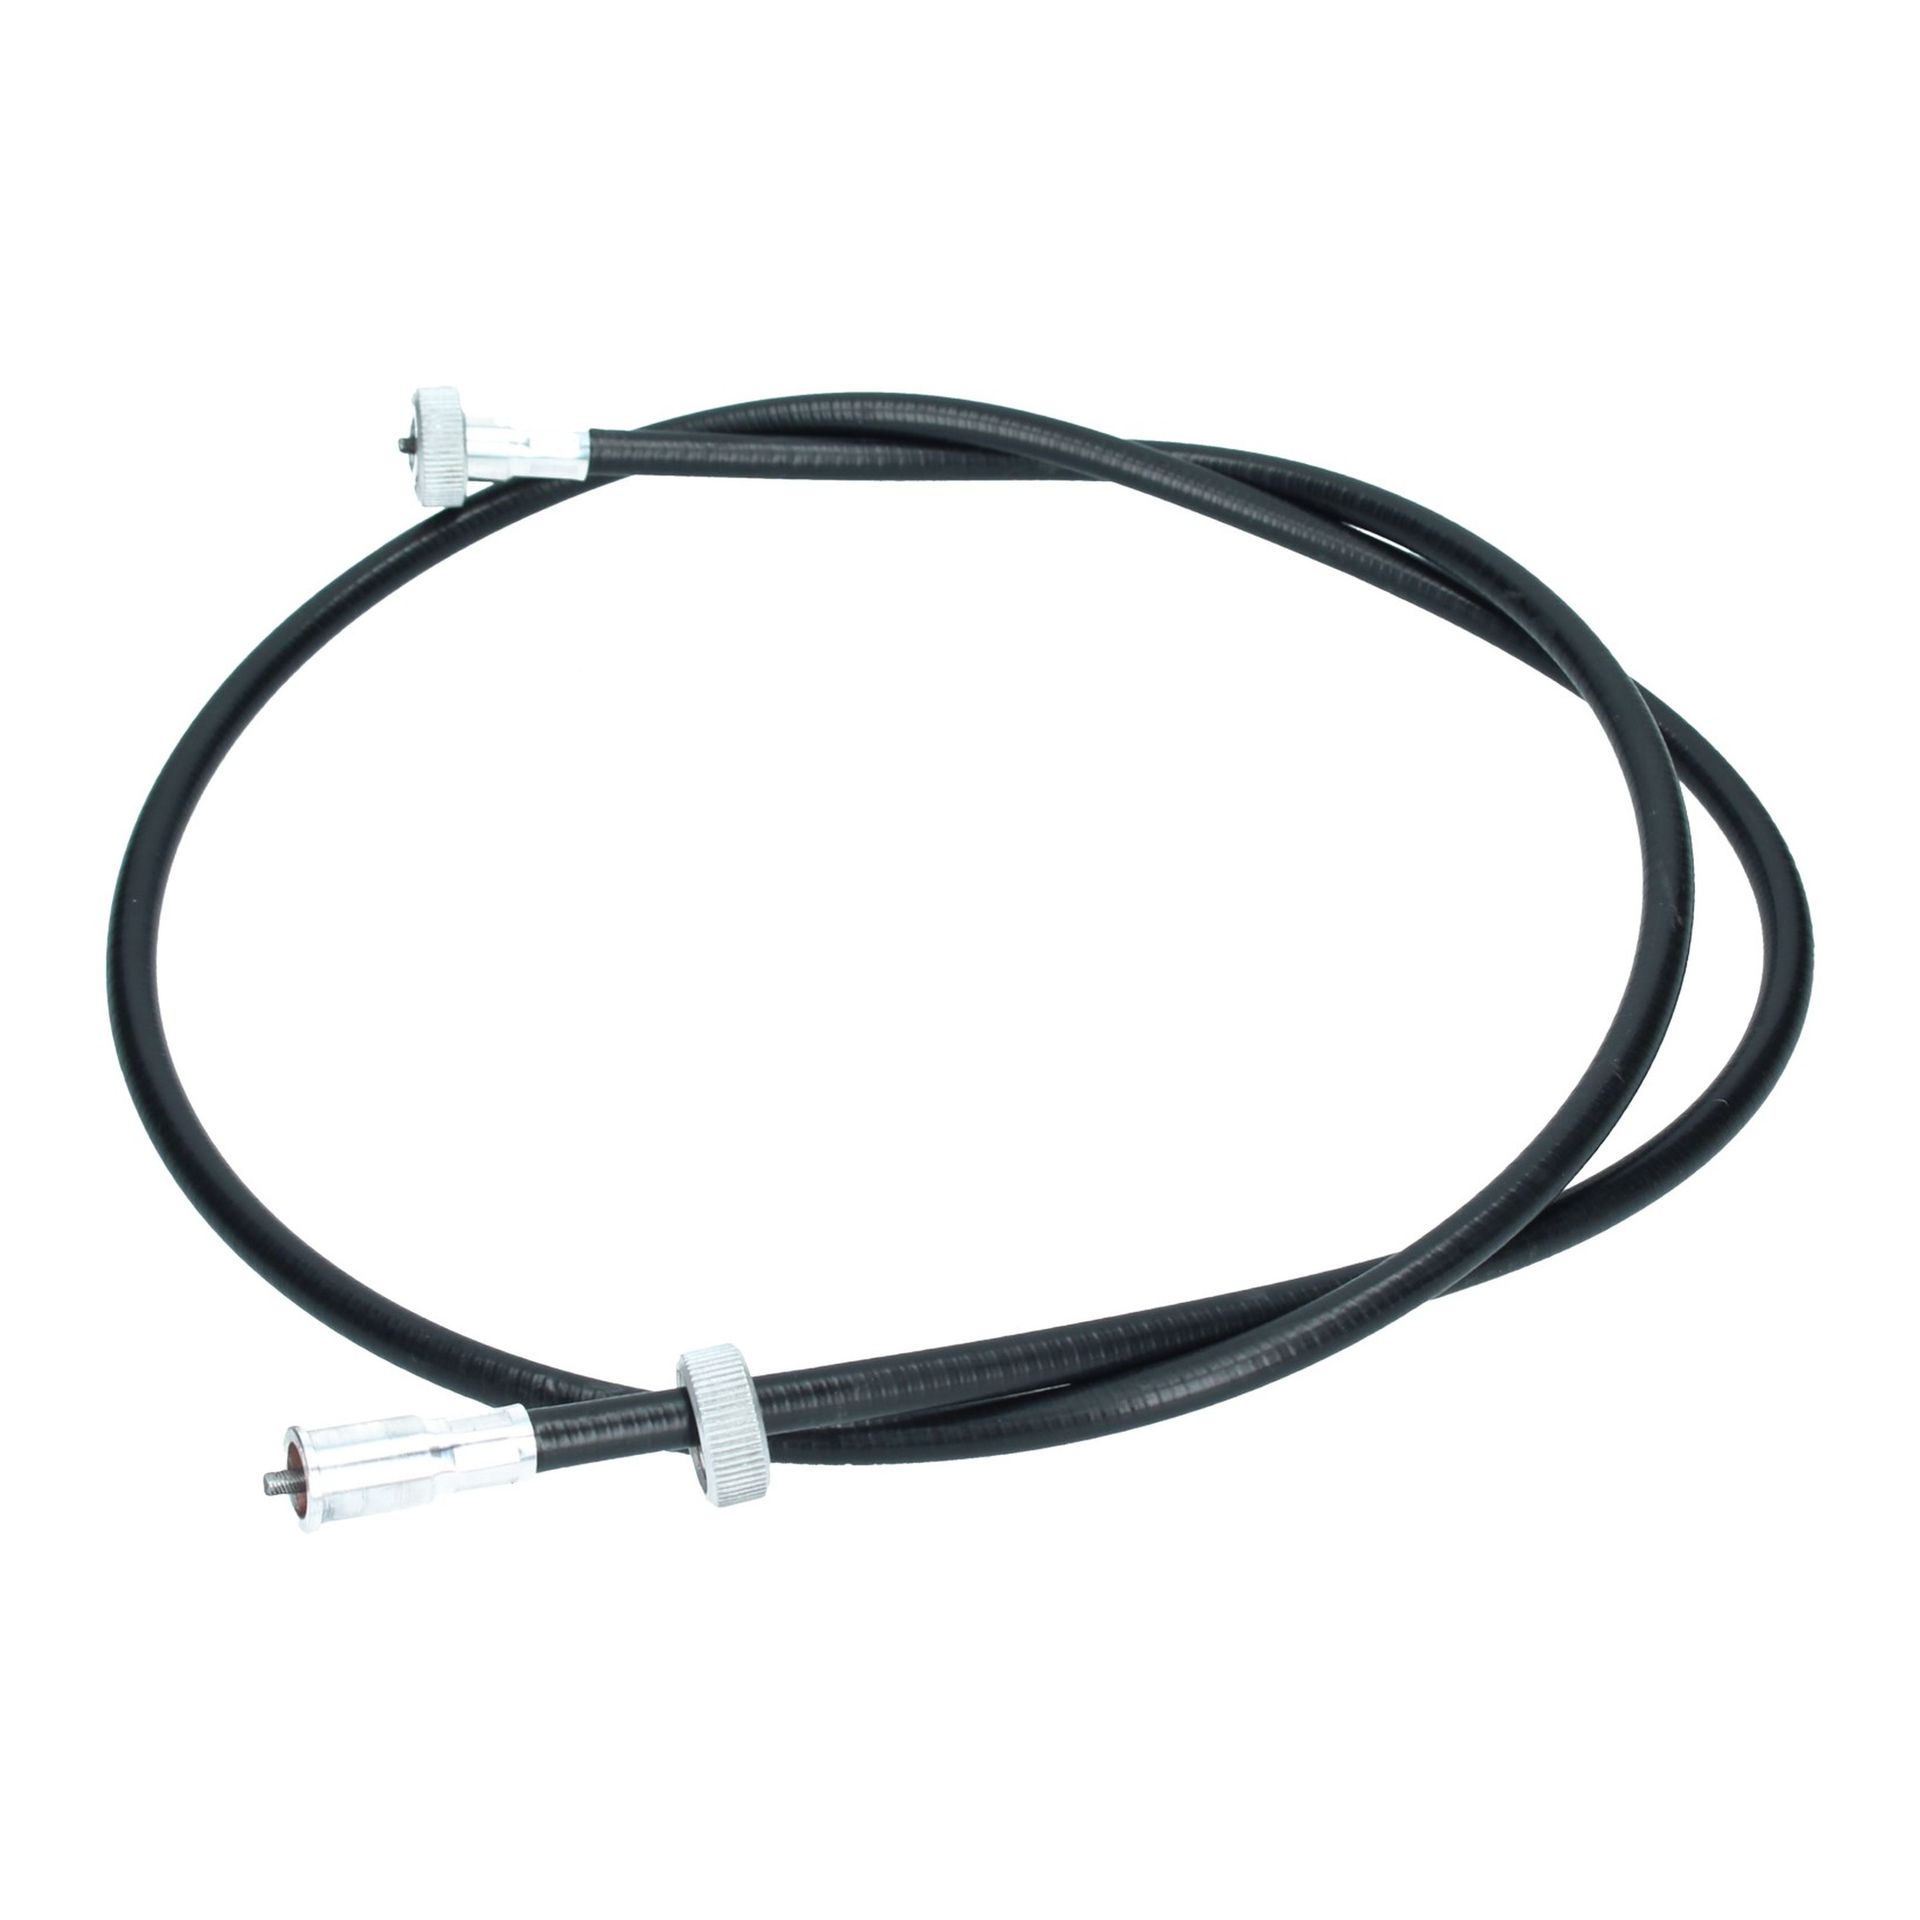 Speedo Cable 275 (85.5" long)